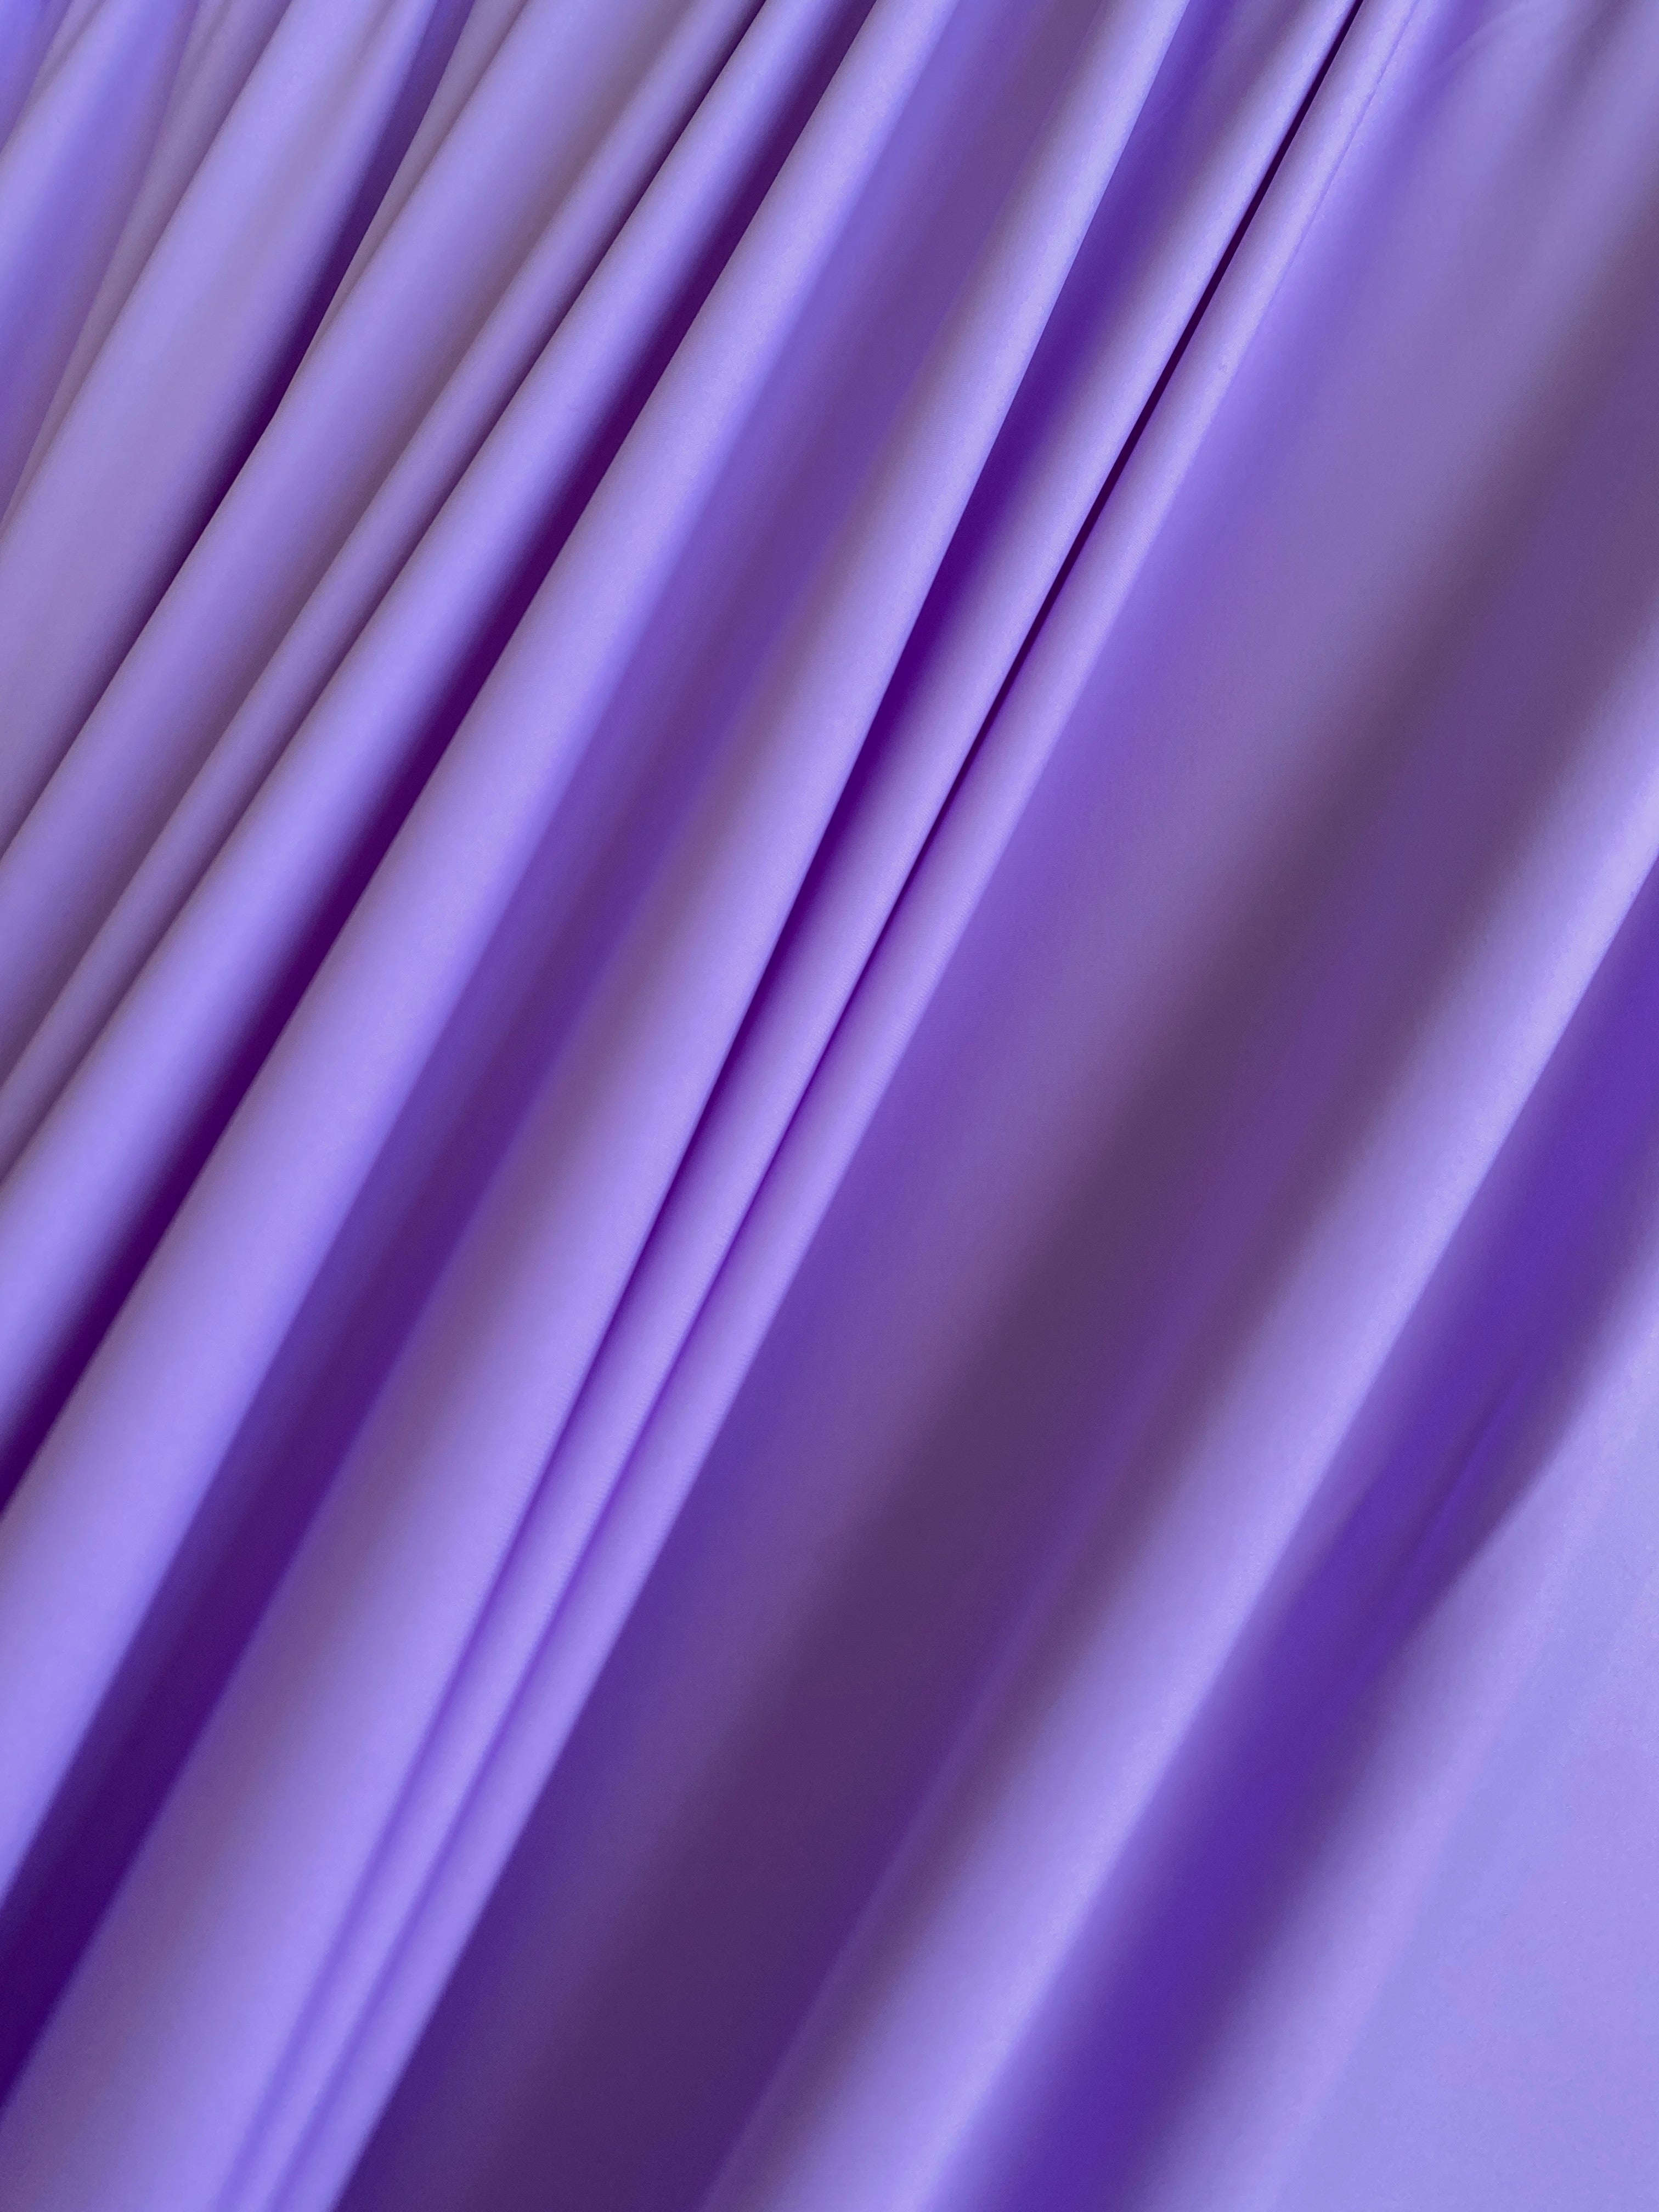 lavender matte nylon spandex, purple matte nylon spandex, light purple matte nylon spandex, dark purple matte nylon spandex, matte nylon spandex for woman, matte nylon spandex in low price, matte nylon spandex on discount, premium quality matte nylon spandex